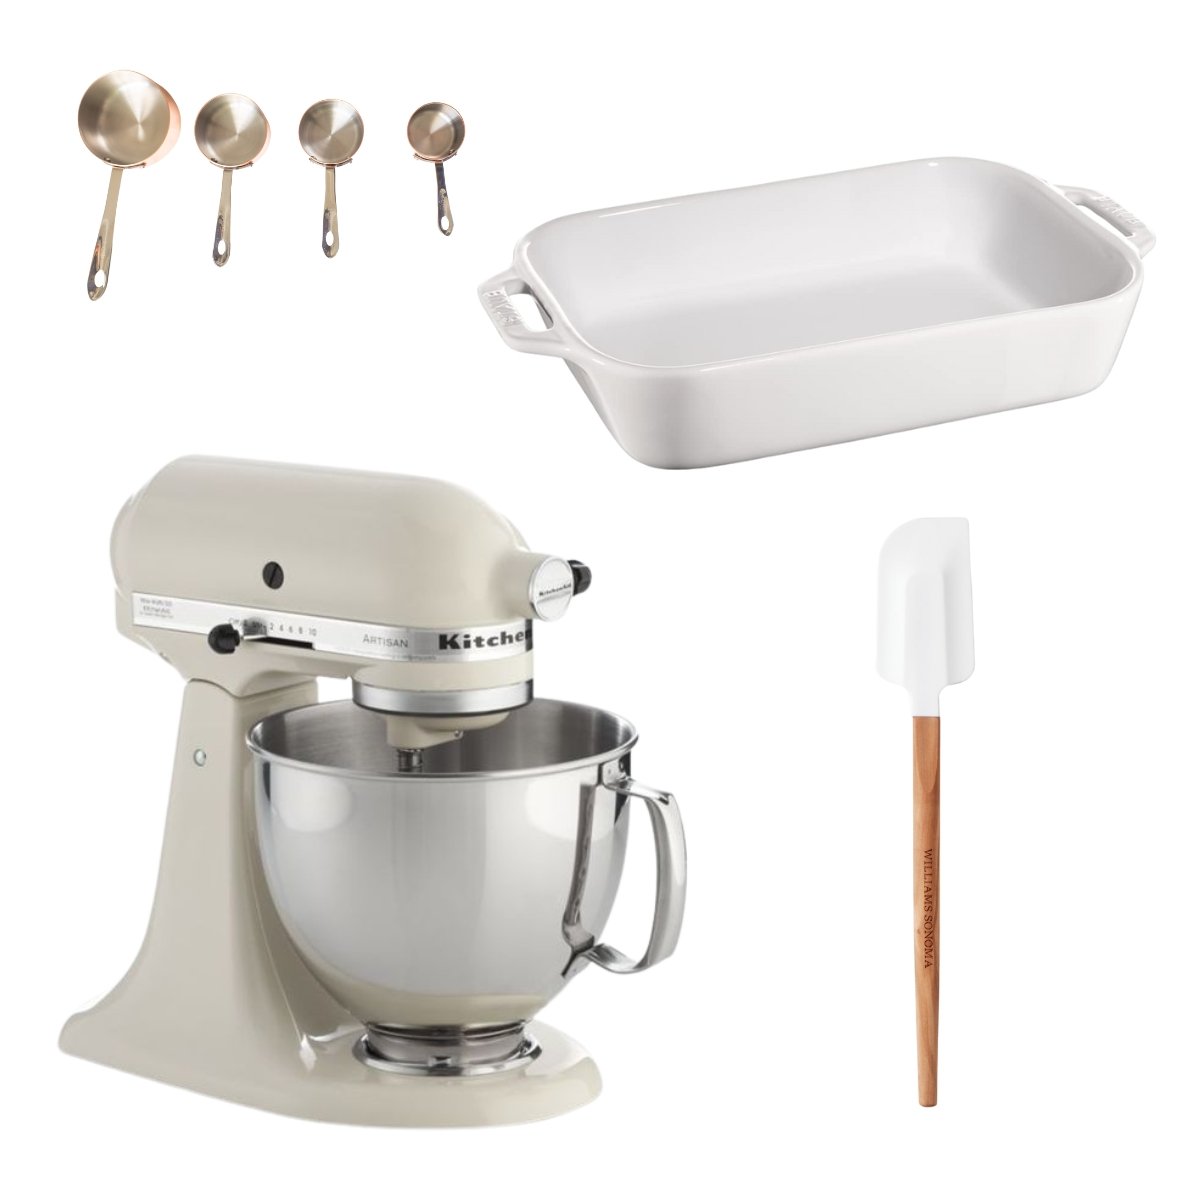 A kitchenaid mixer, bowls, spoons, and utensils.